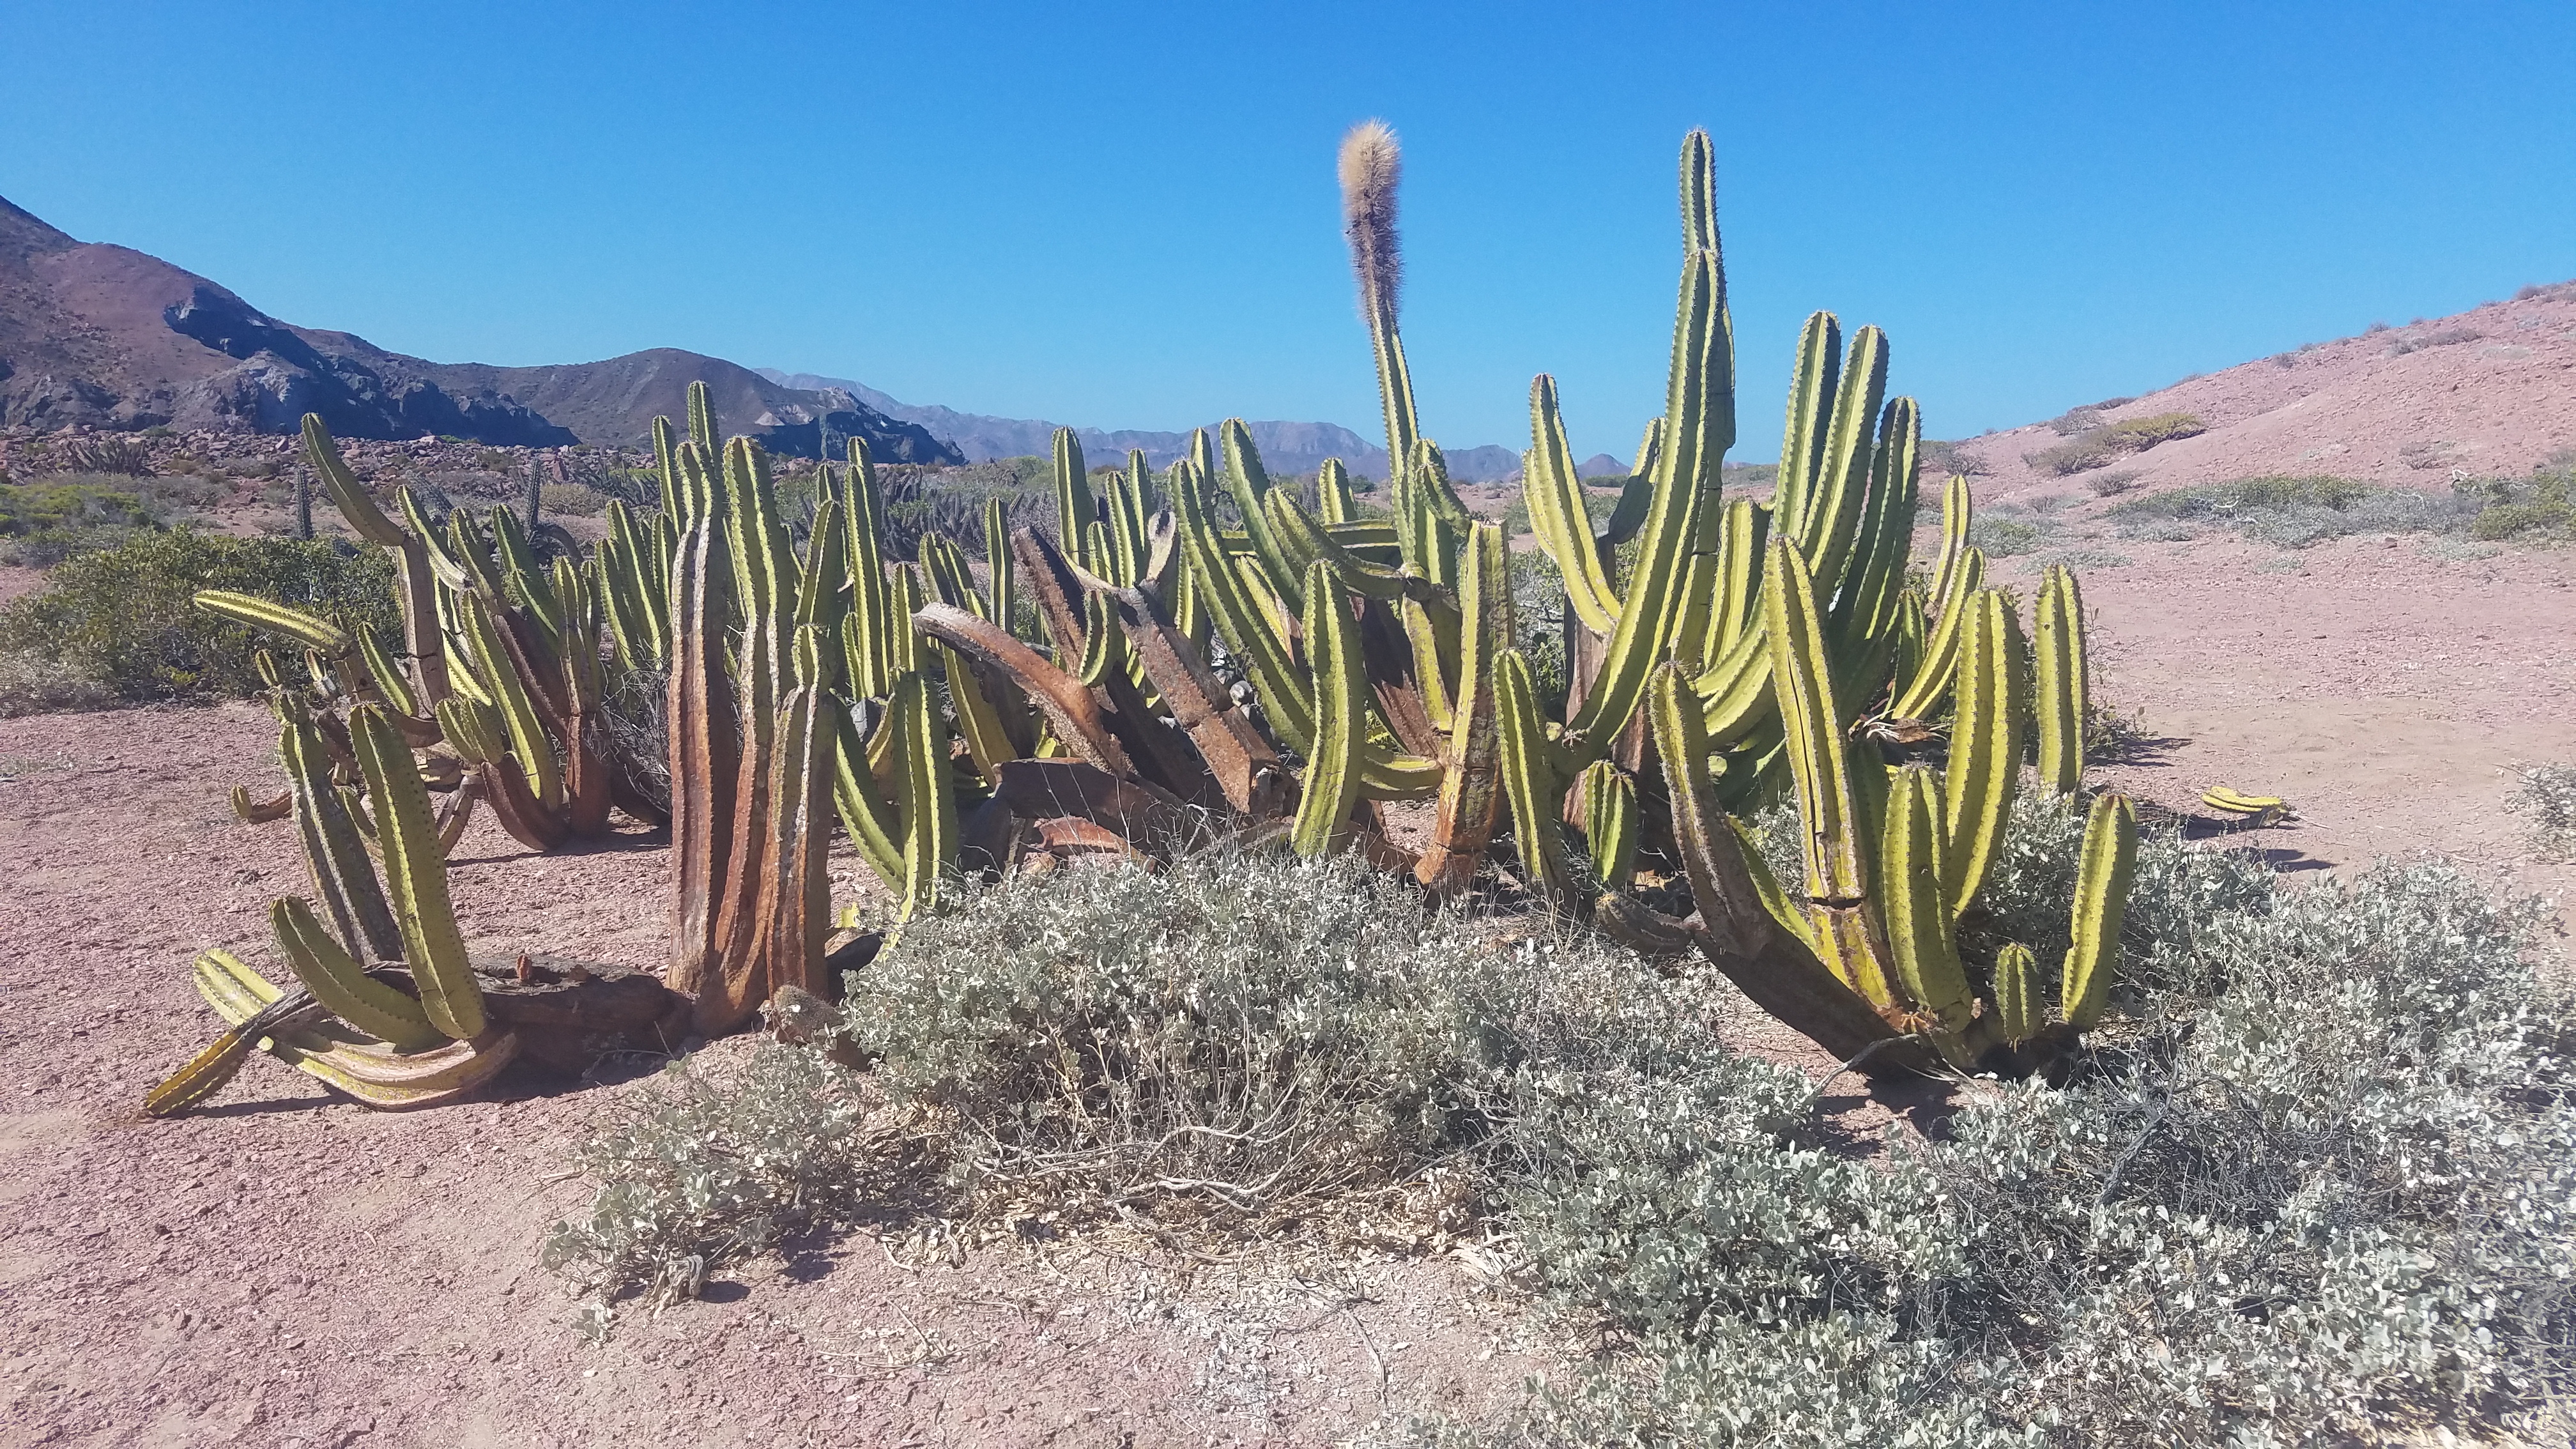 Cactus. This is the desert.